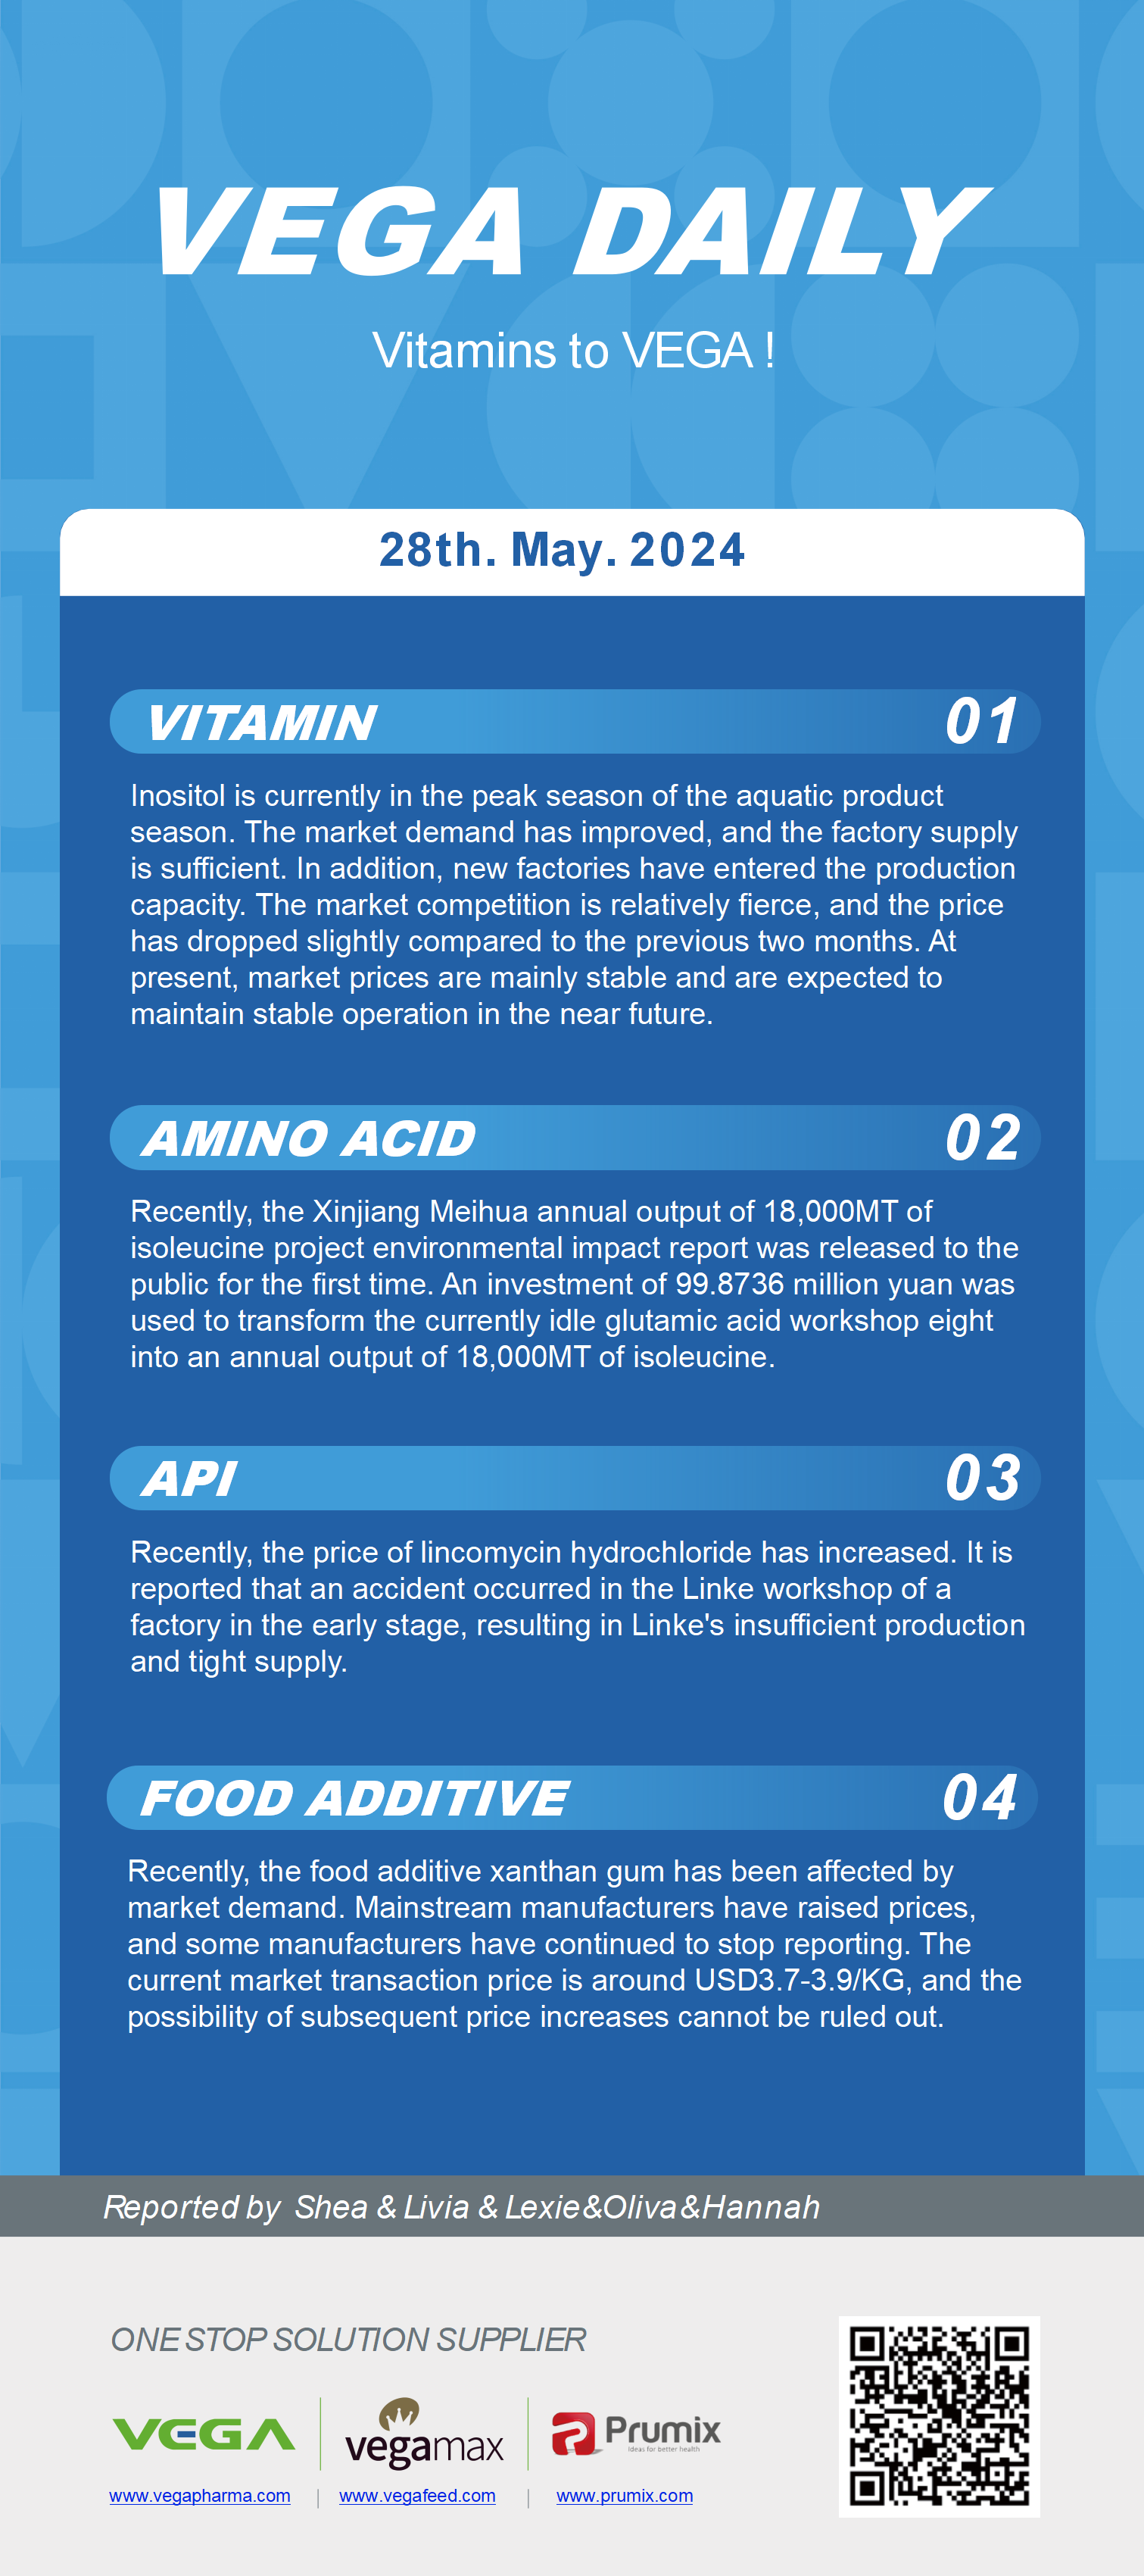 Vega Daily Dated on May 28th 2024 Vitamin Amino Acid APl Food Additives.png